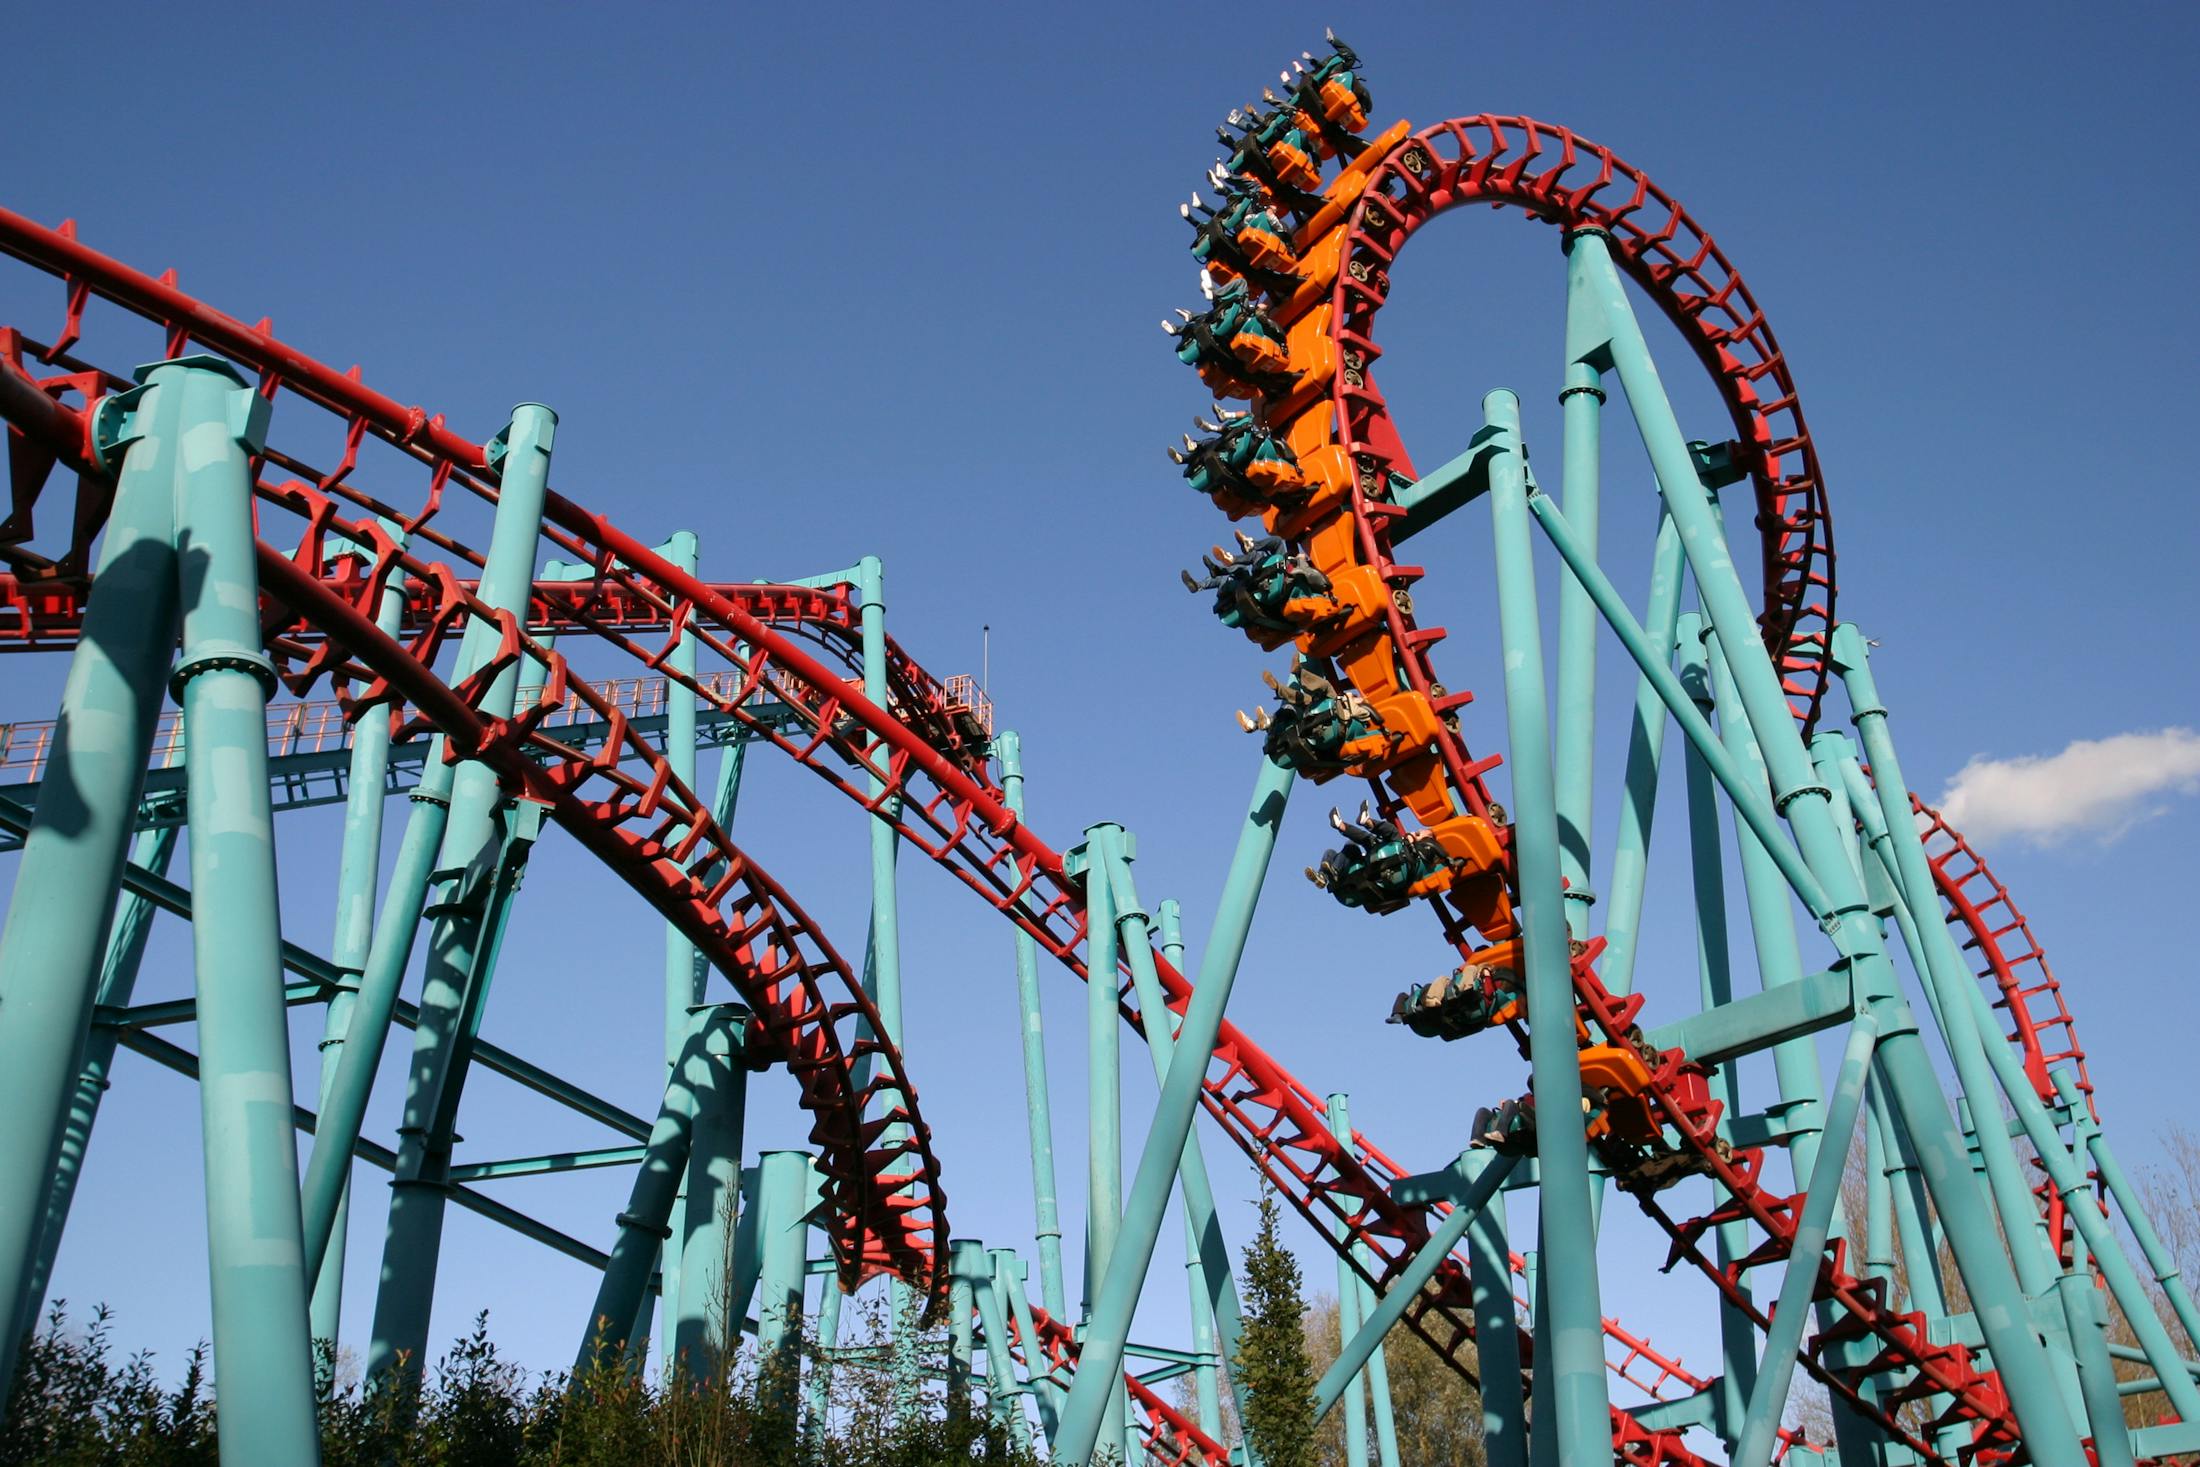 rollercoaster at amusement park